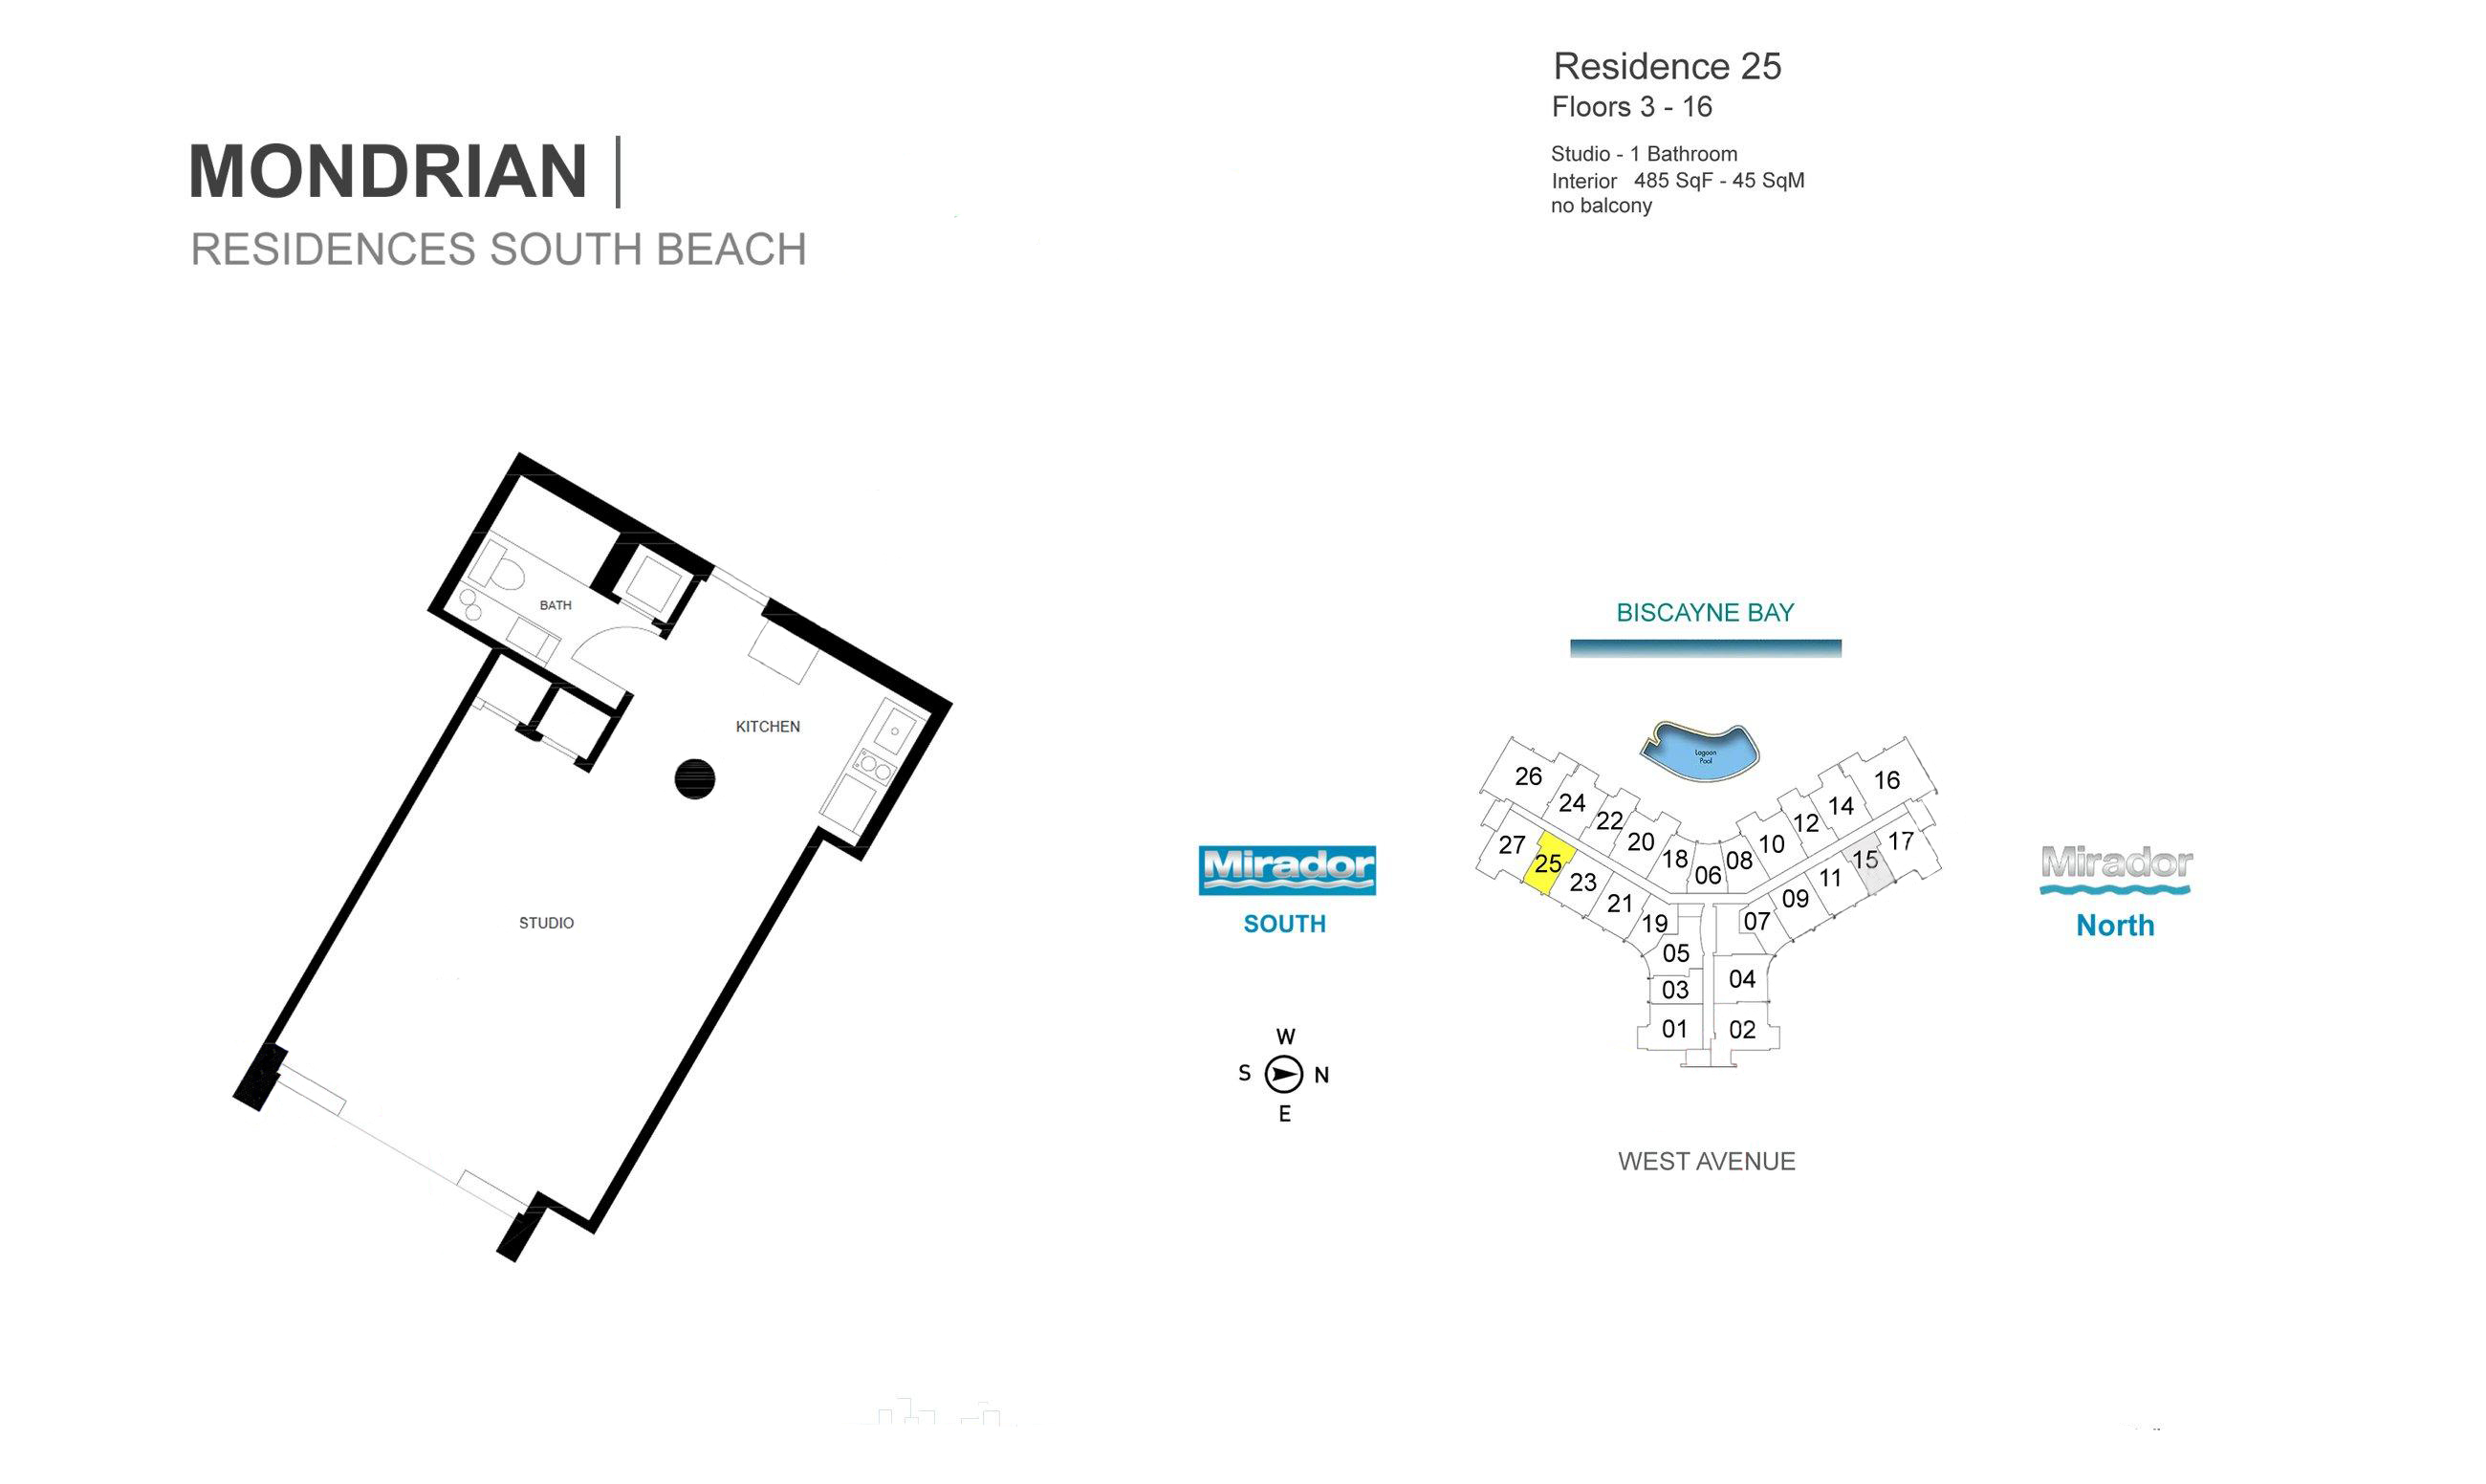 Mondrian South Beach Residence 25